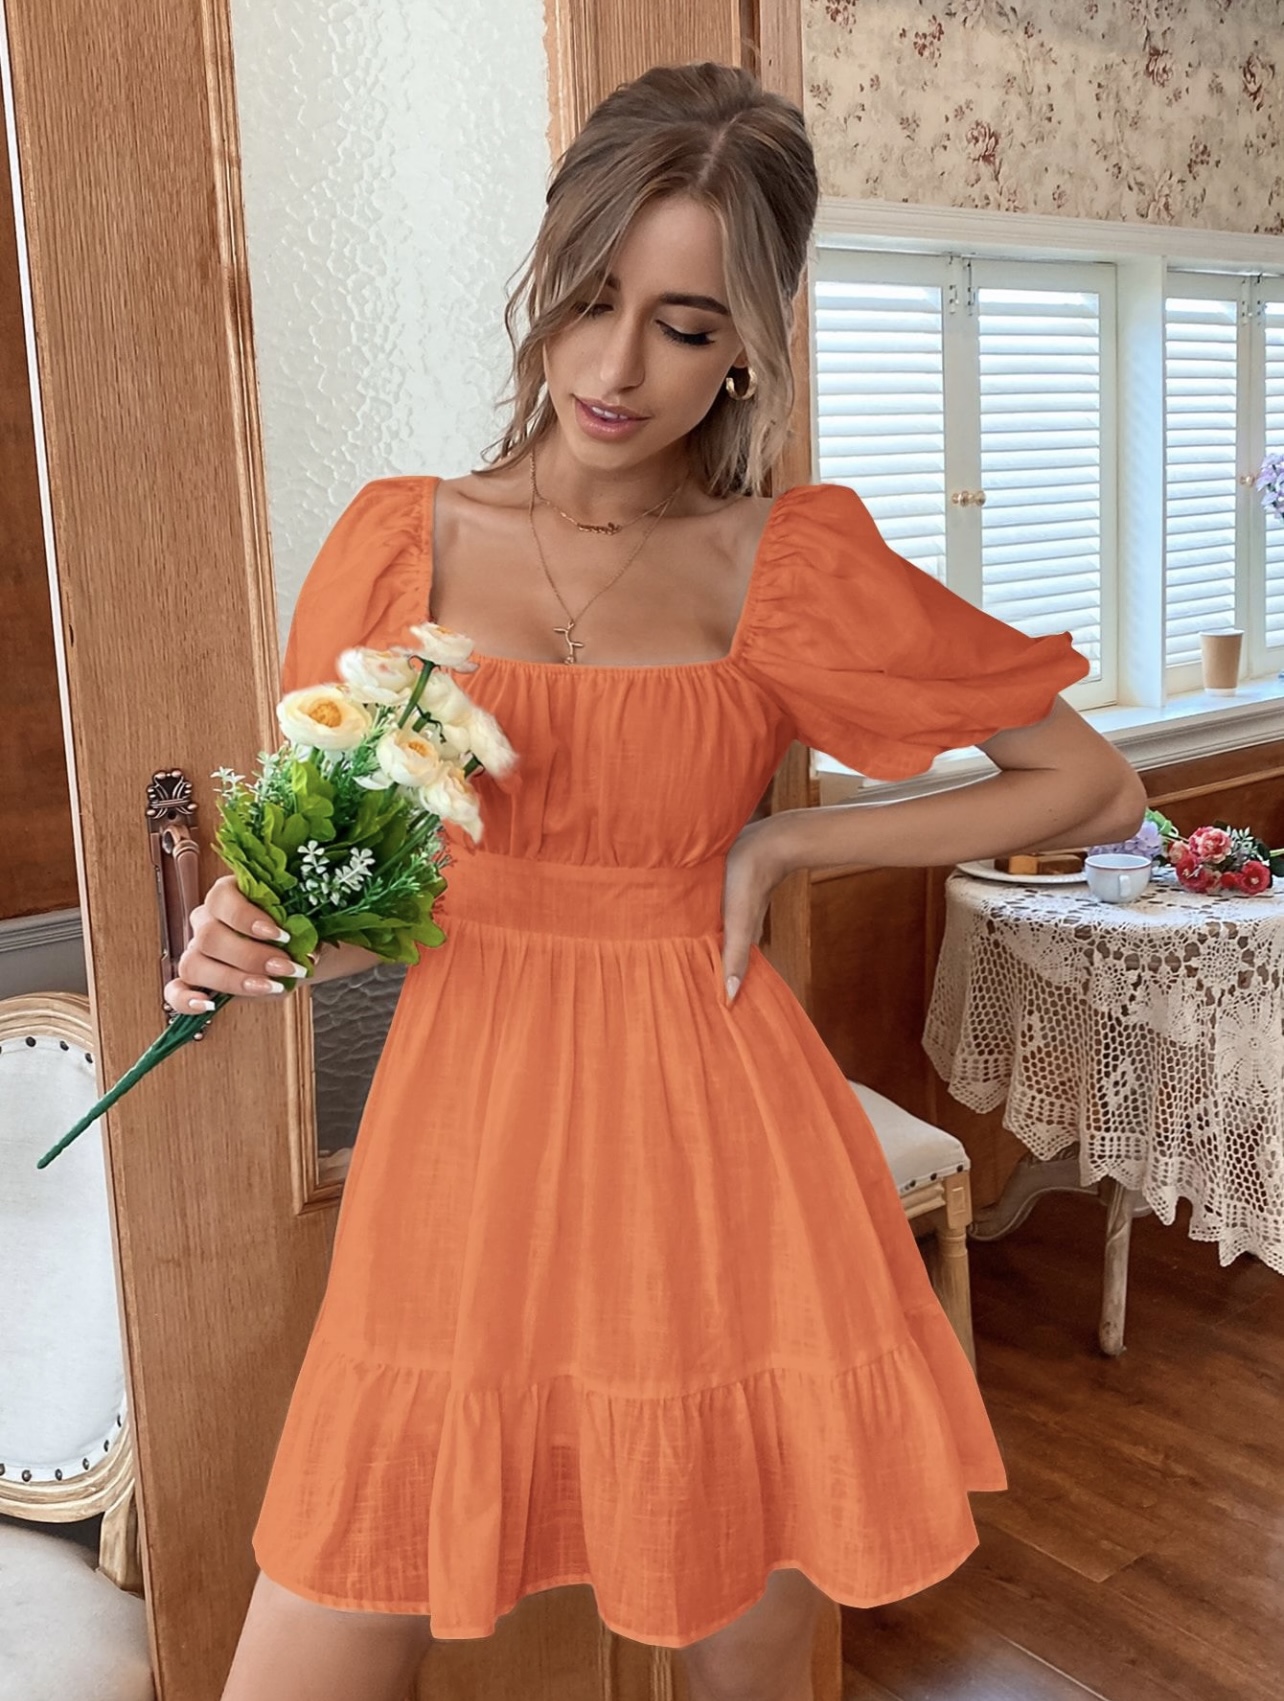 orangedress